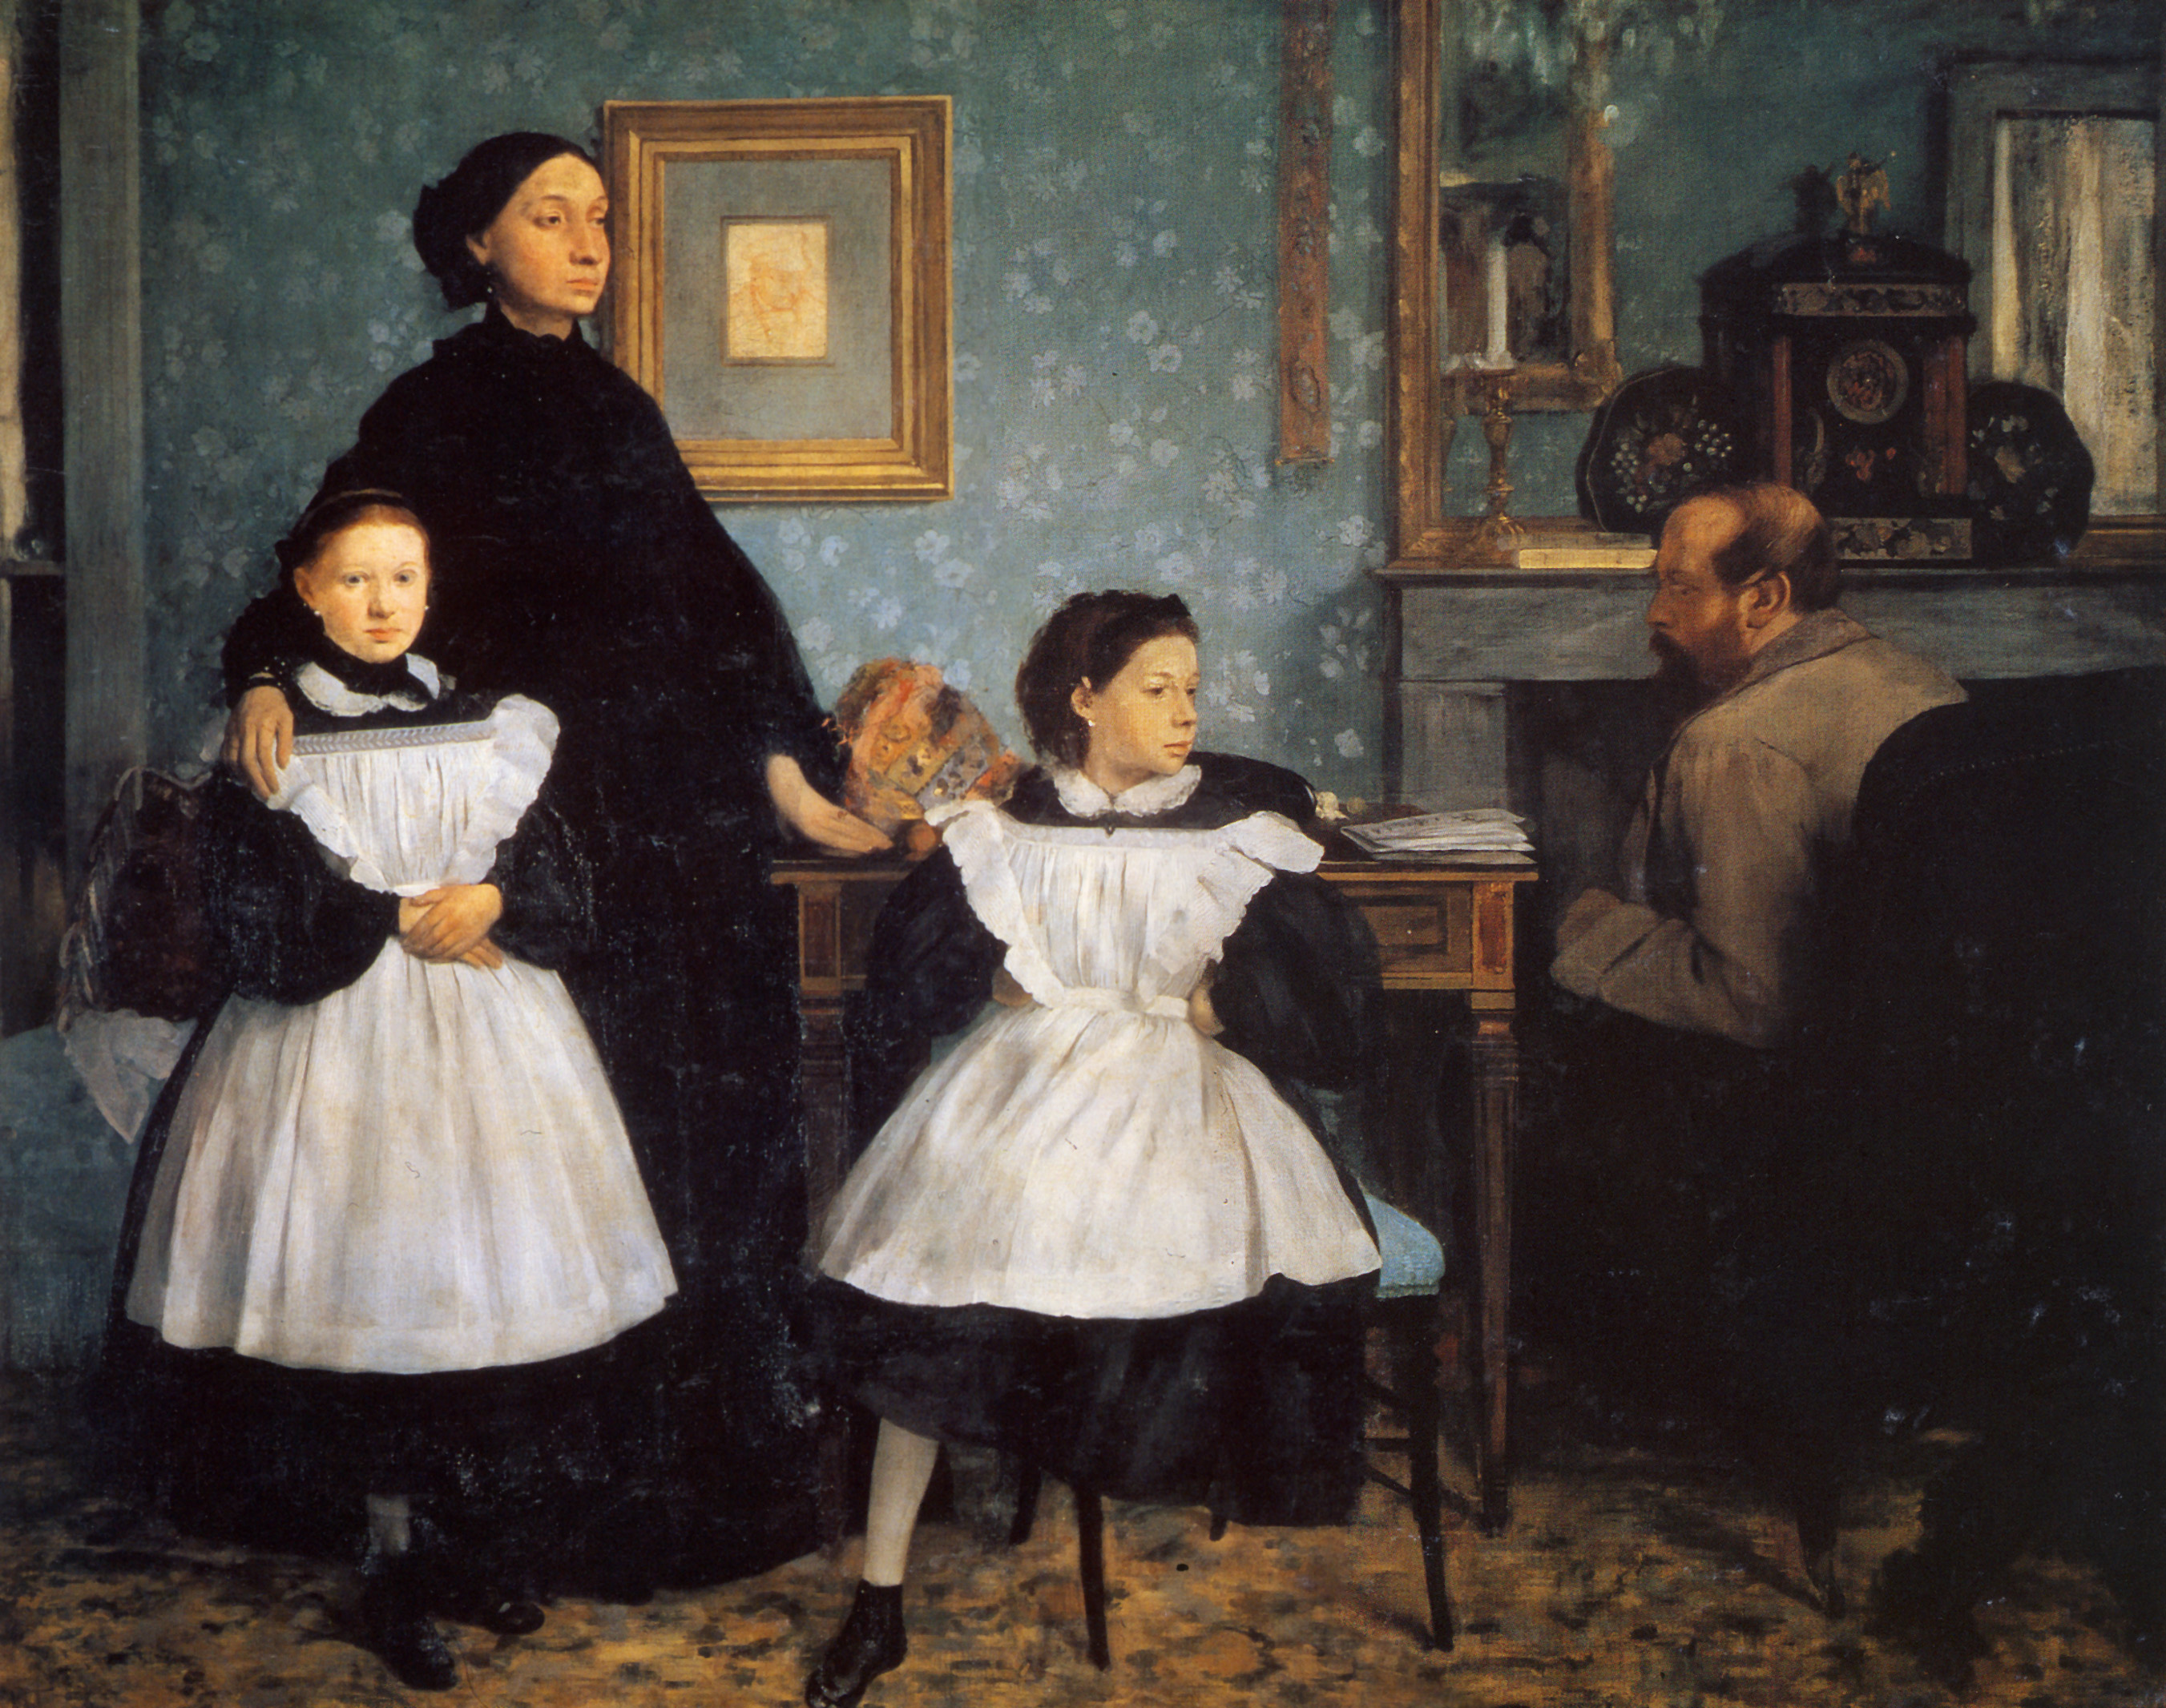 The Belleli Family by Edgar Degas - 1860-1862 - 200 x 250 cm Musée d'Orsay